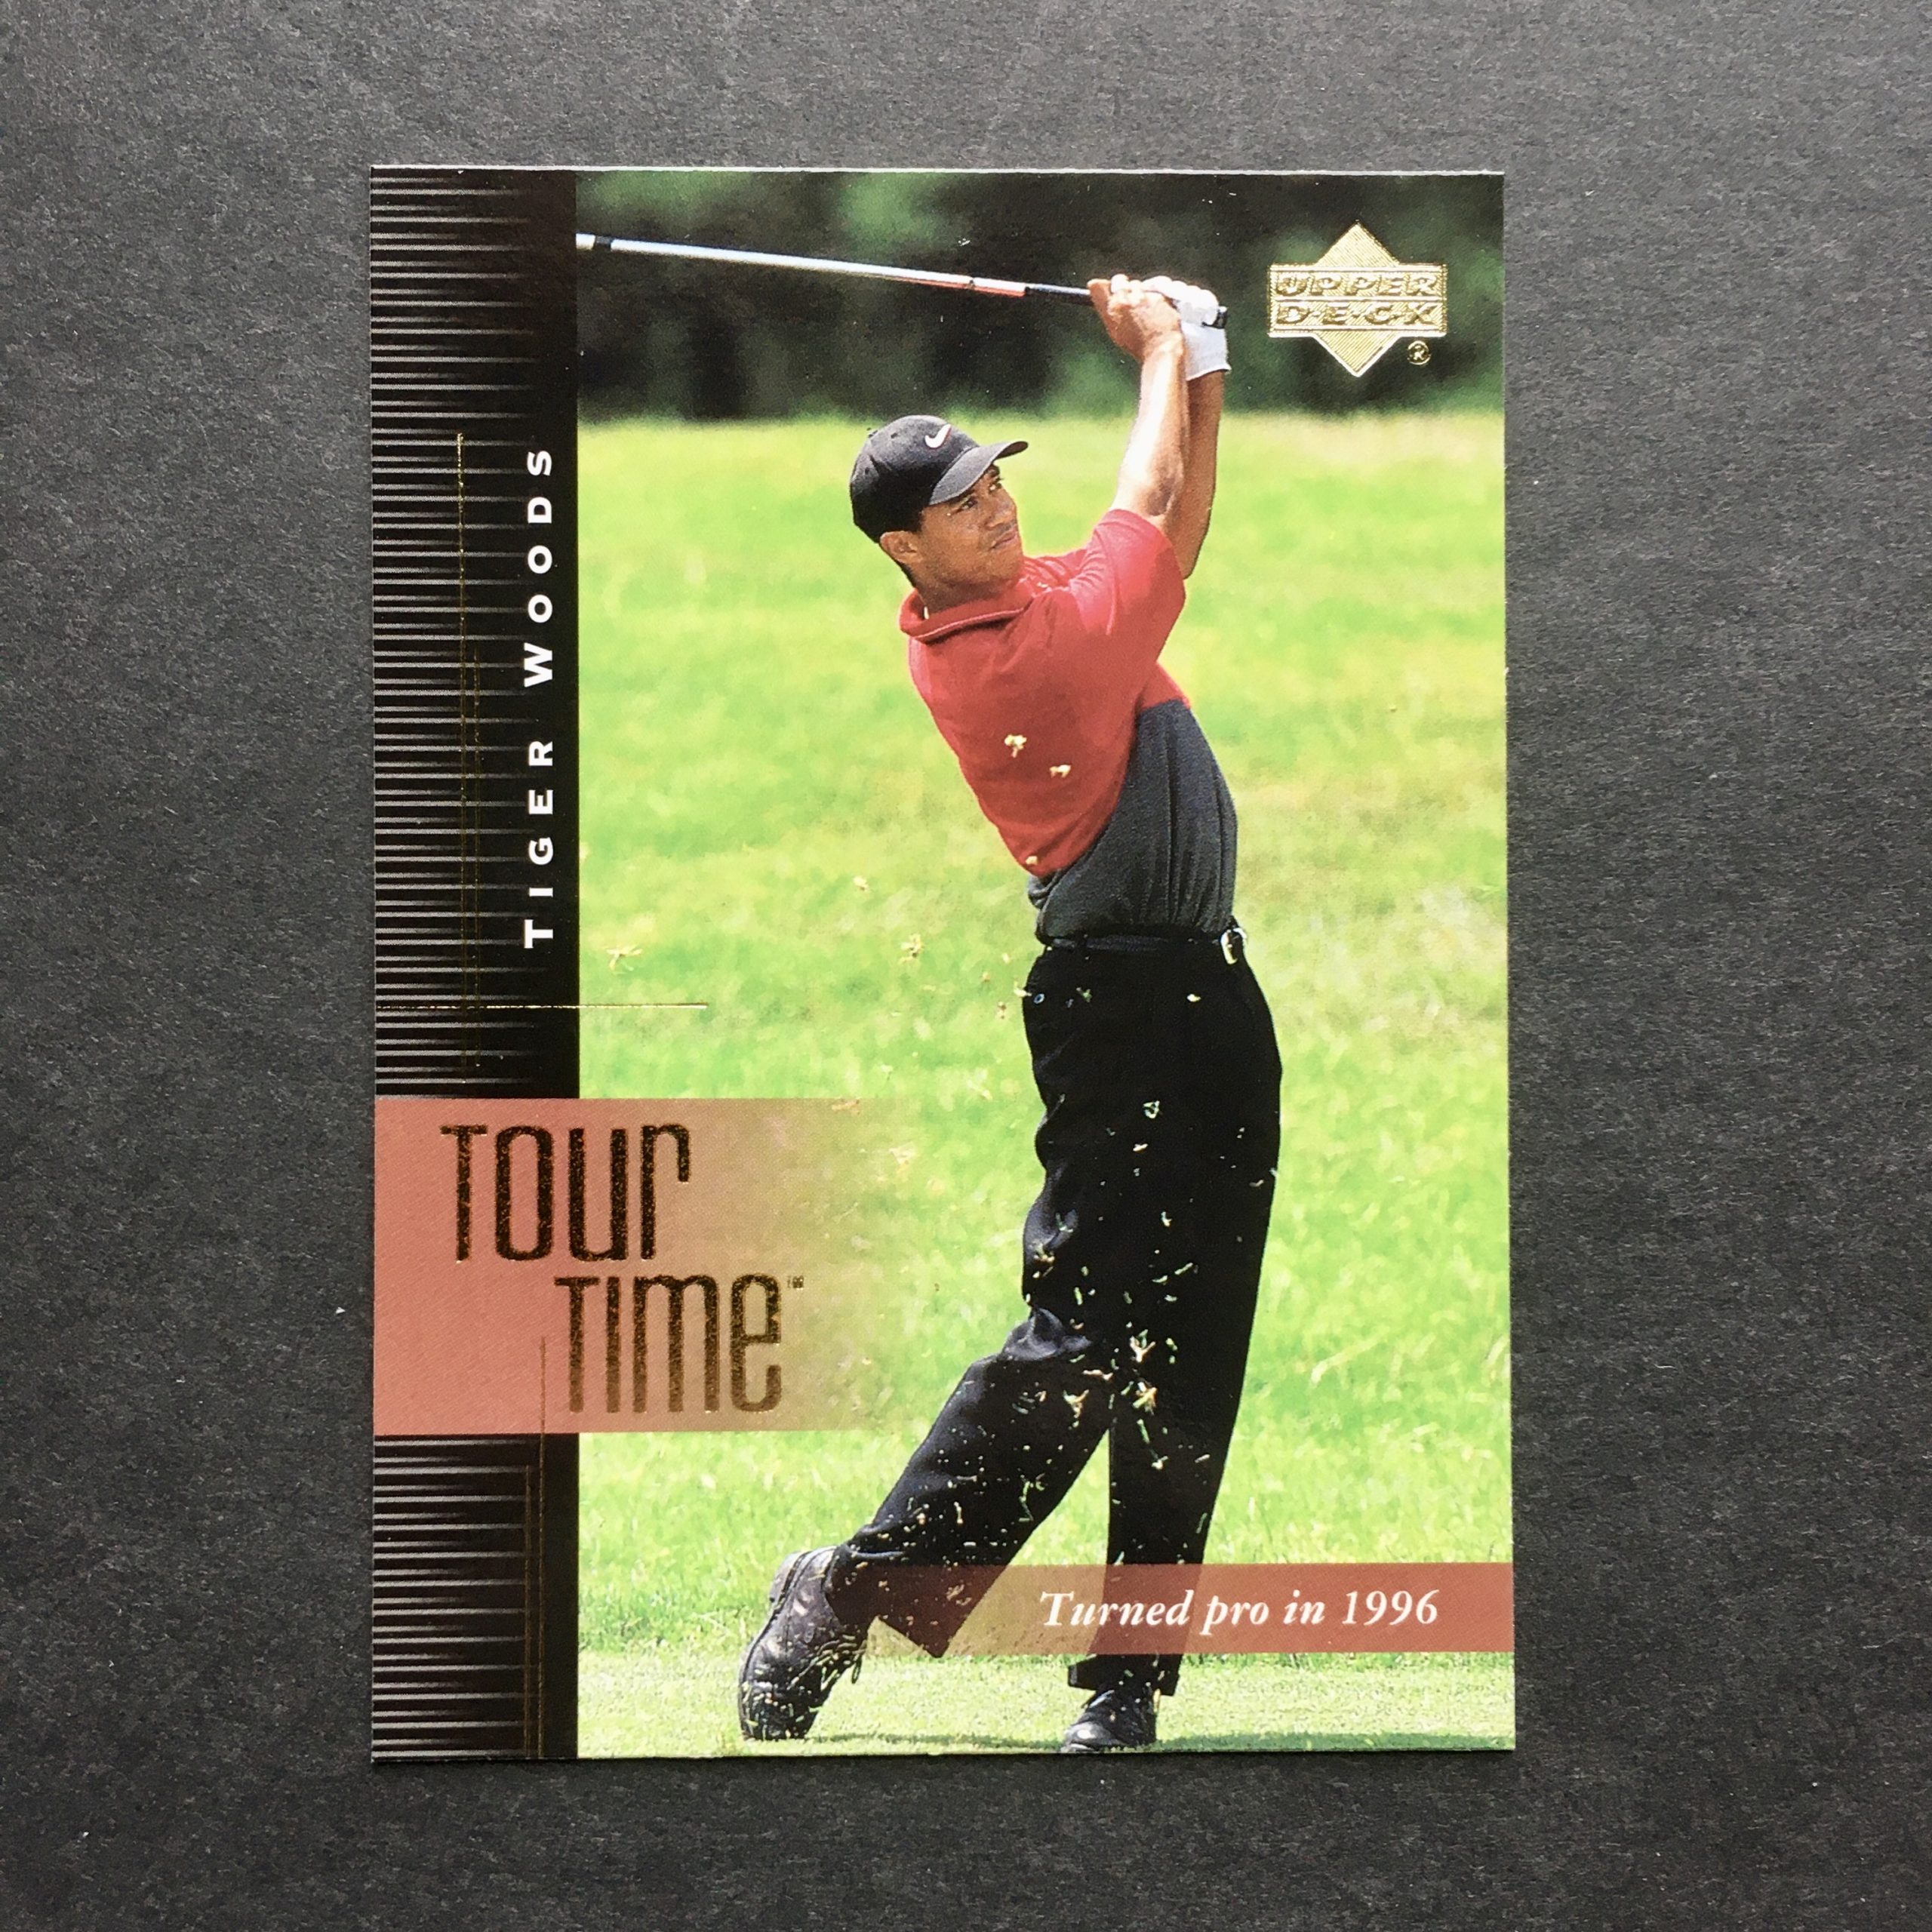 Tiger Woods 2001 Upper Deck Tour Time Card